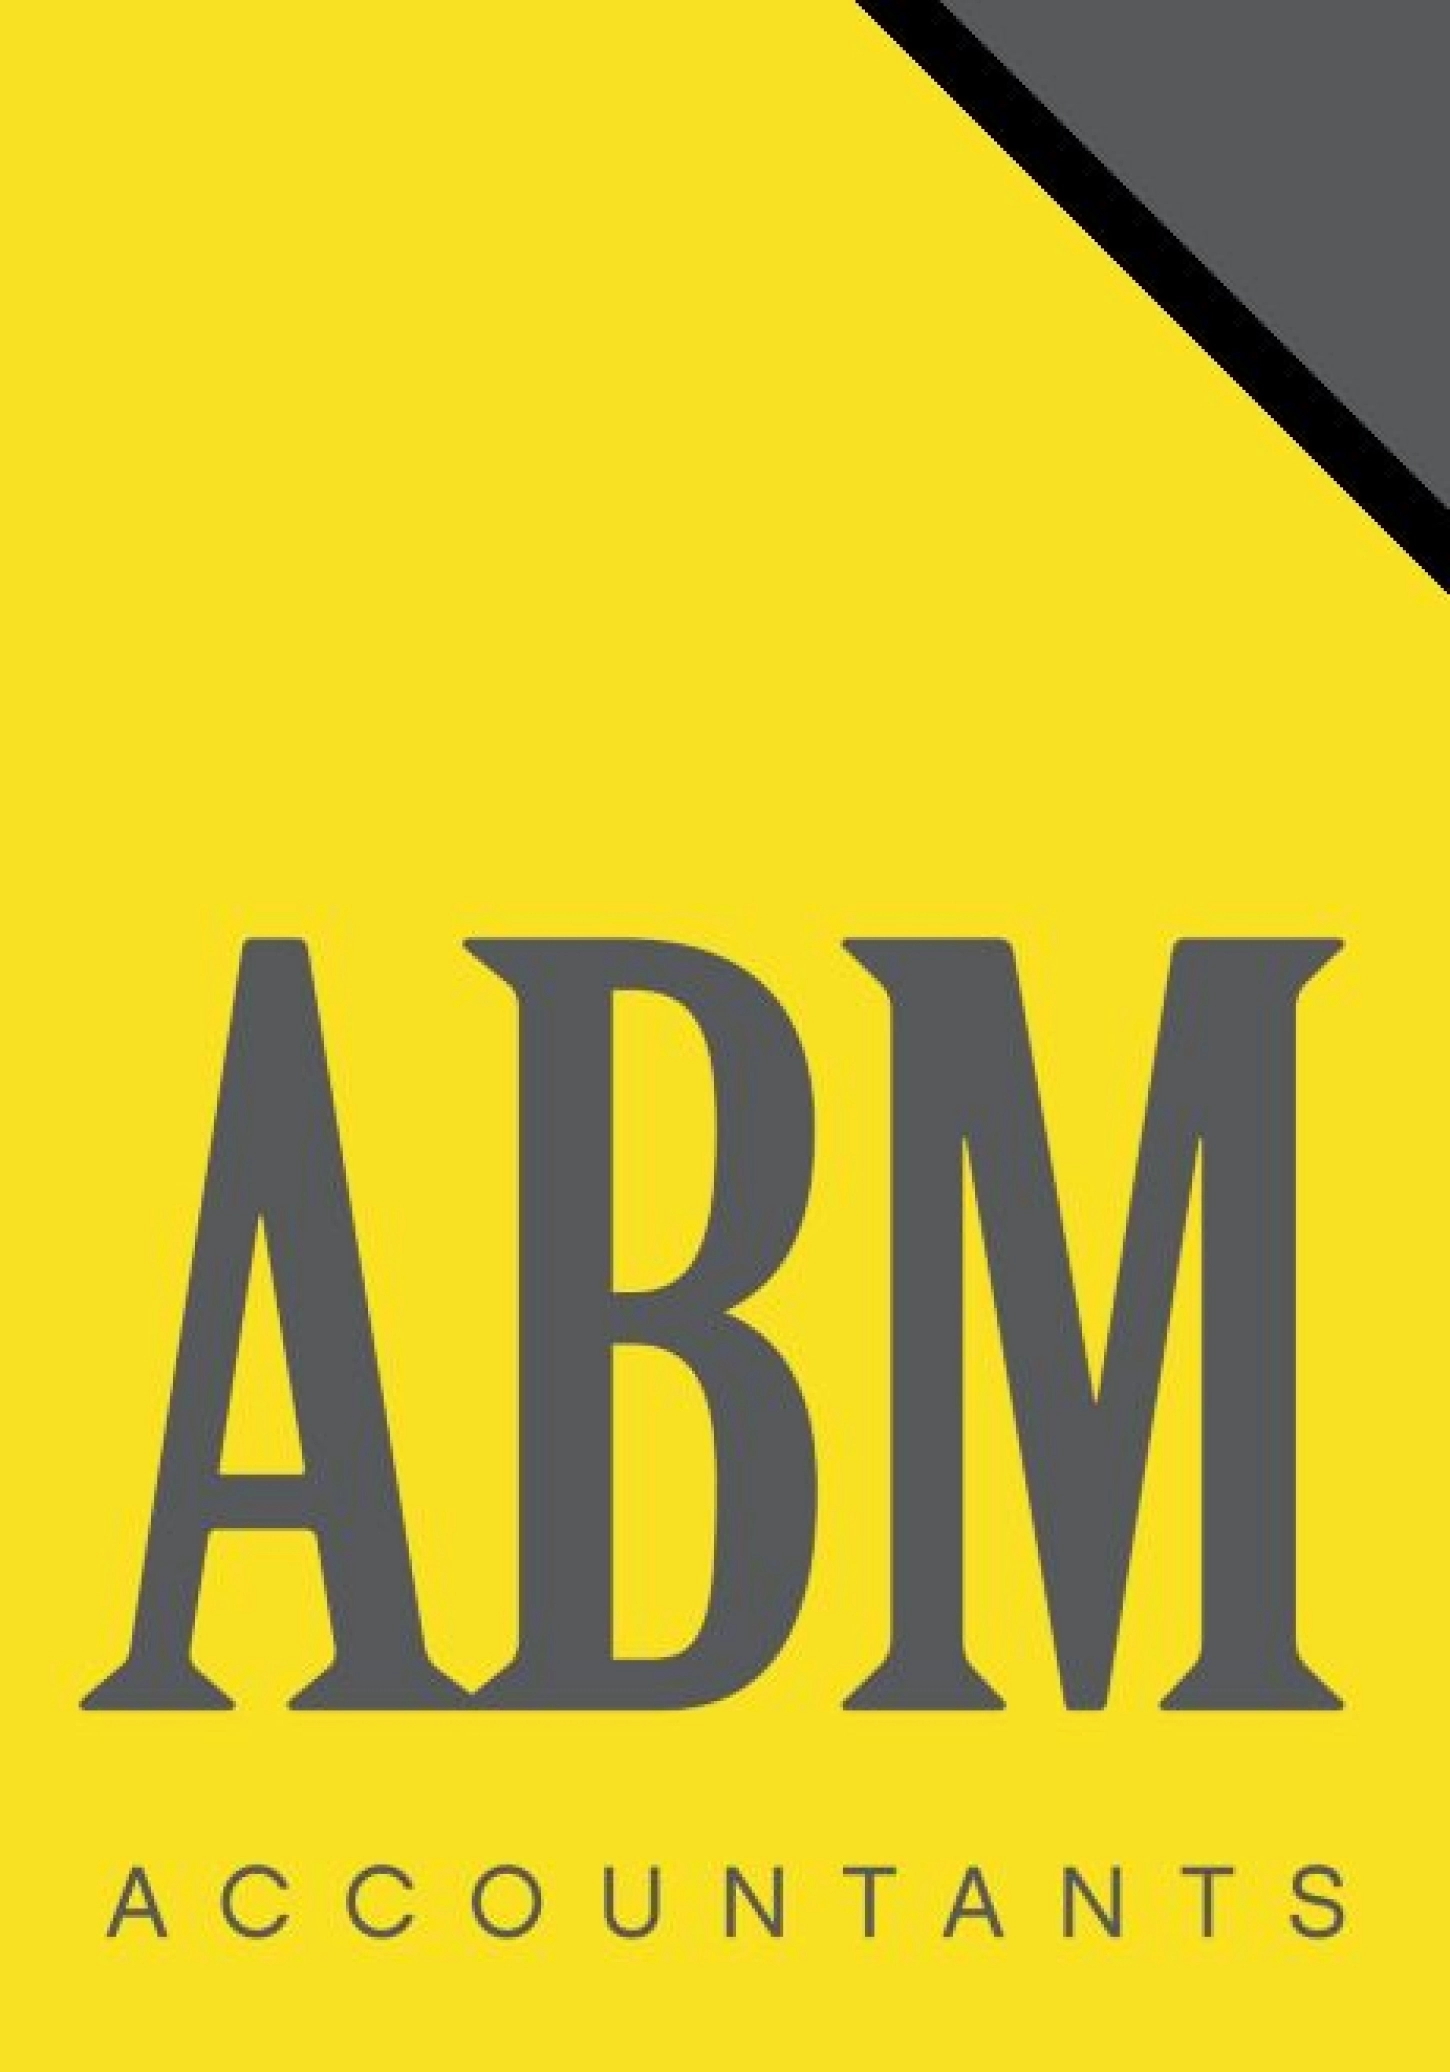 Partner ABM Accountants | iAssist 